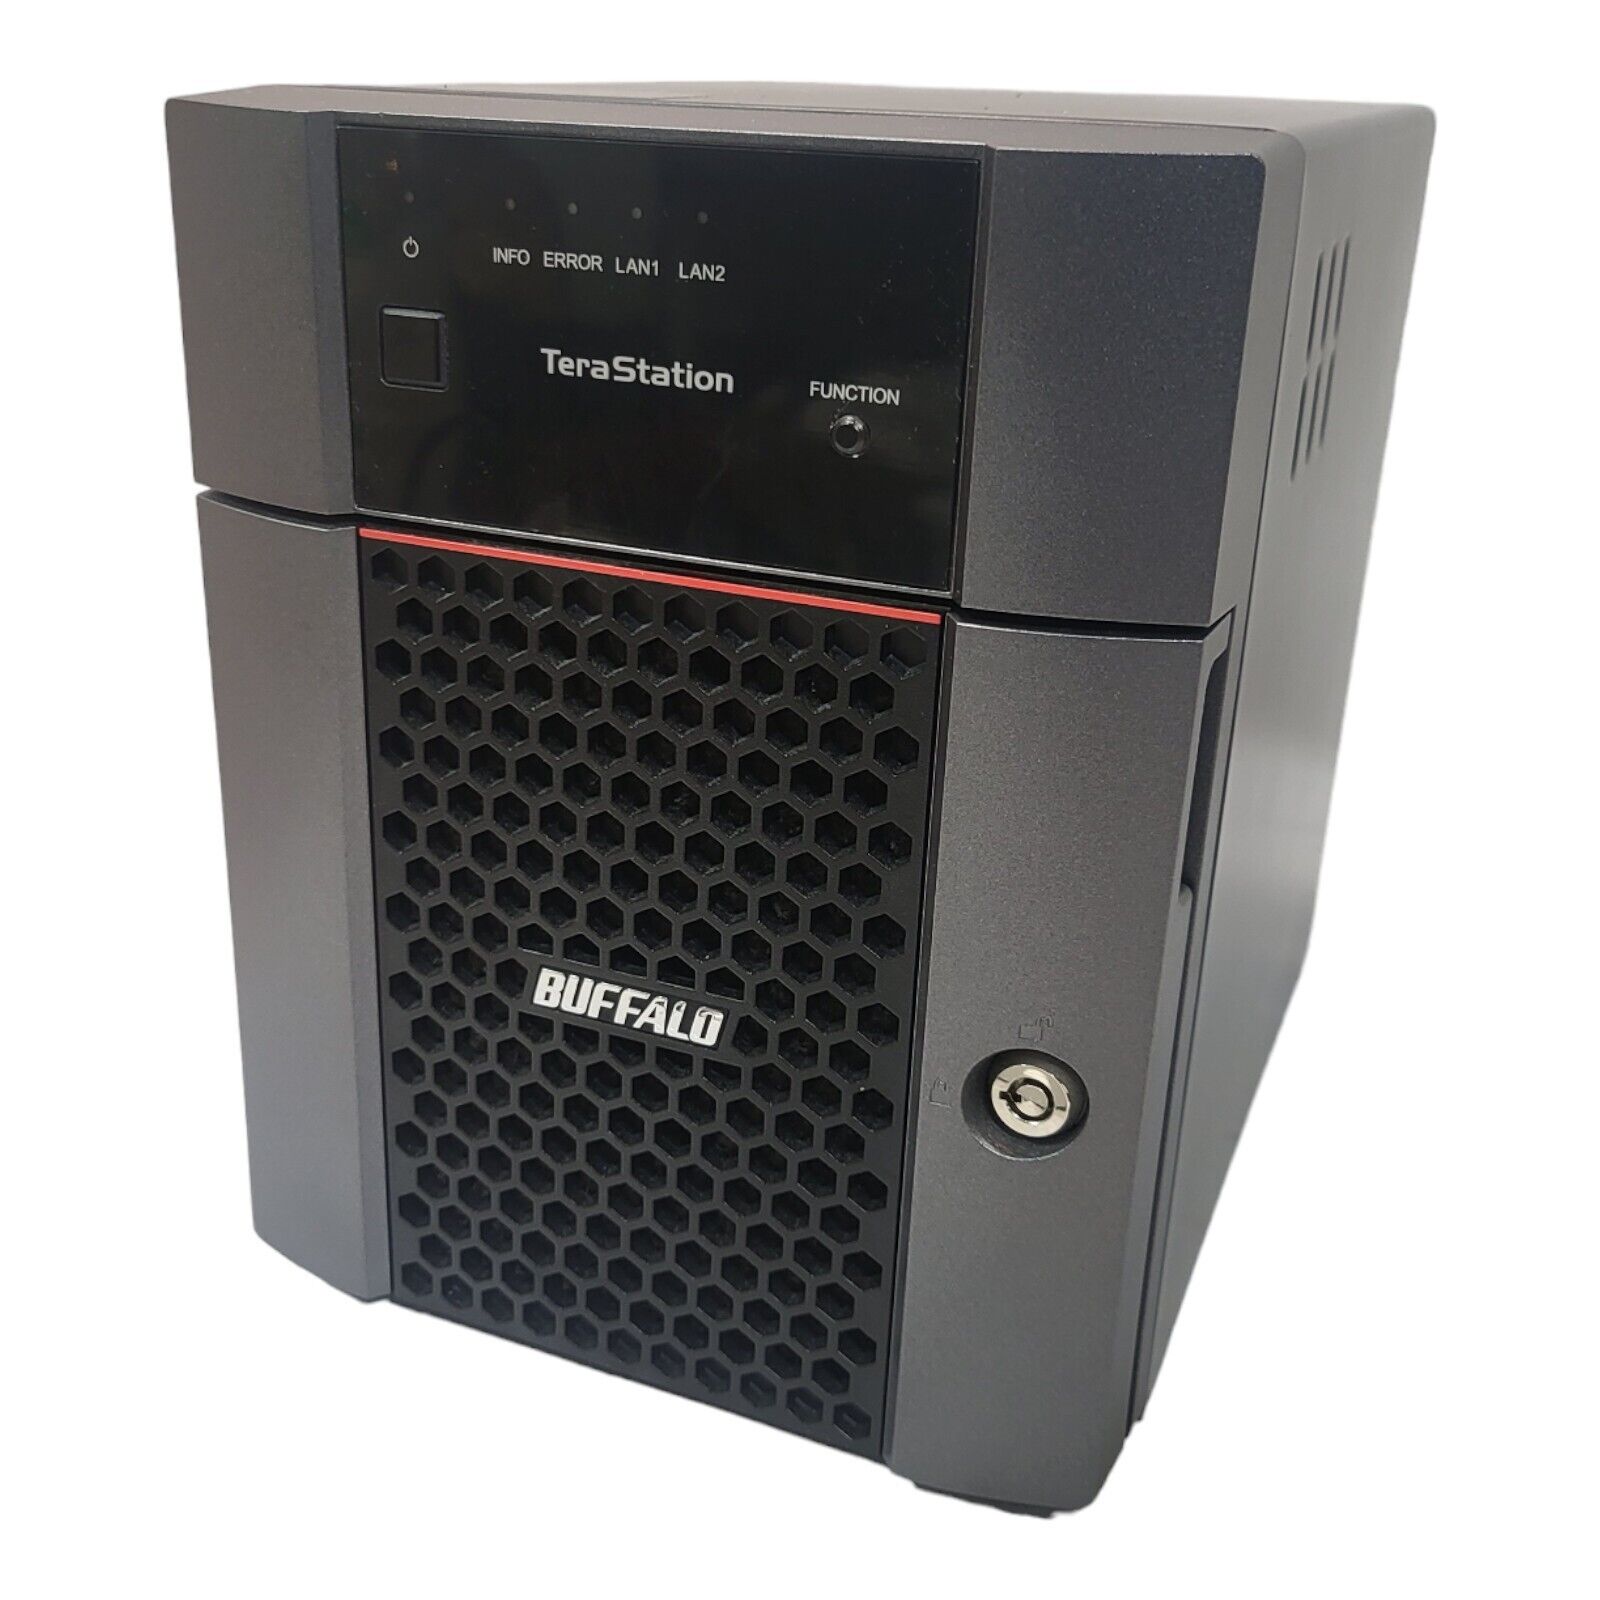 Buffalo 3410DN TeraStation TS3410DN1204 Storage NAS Drive RAID ISCSI - TESTED